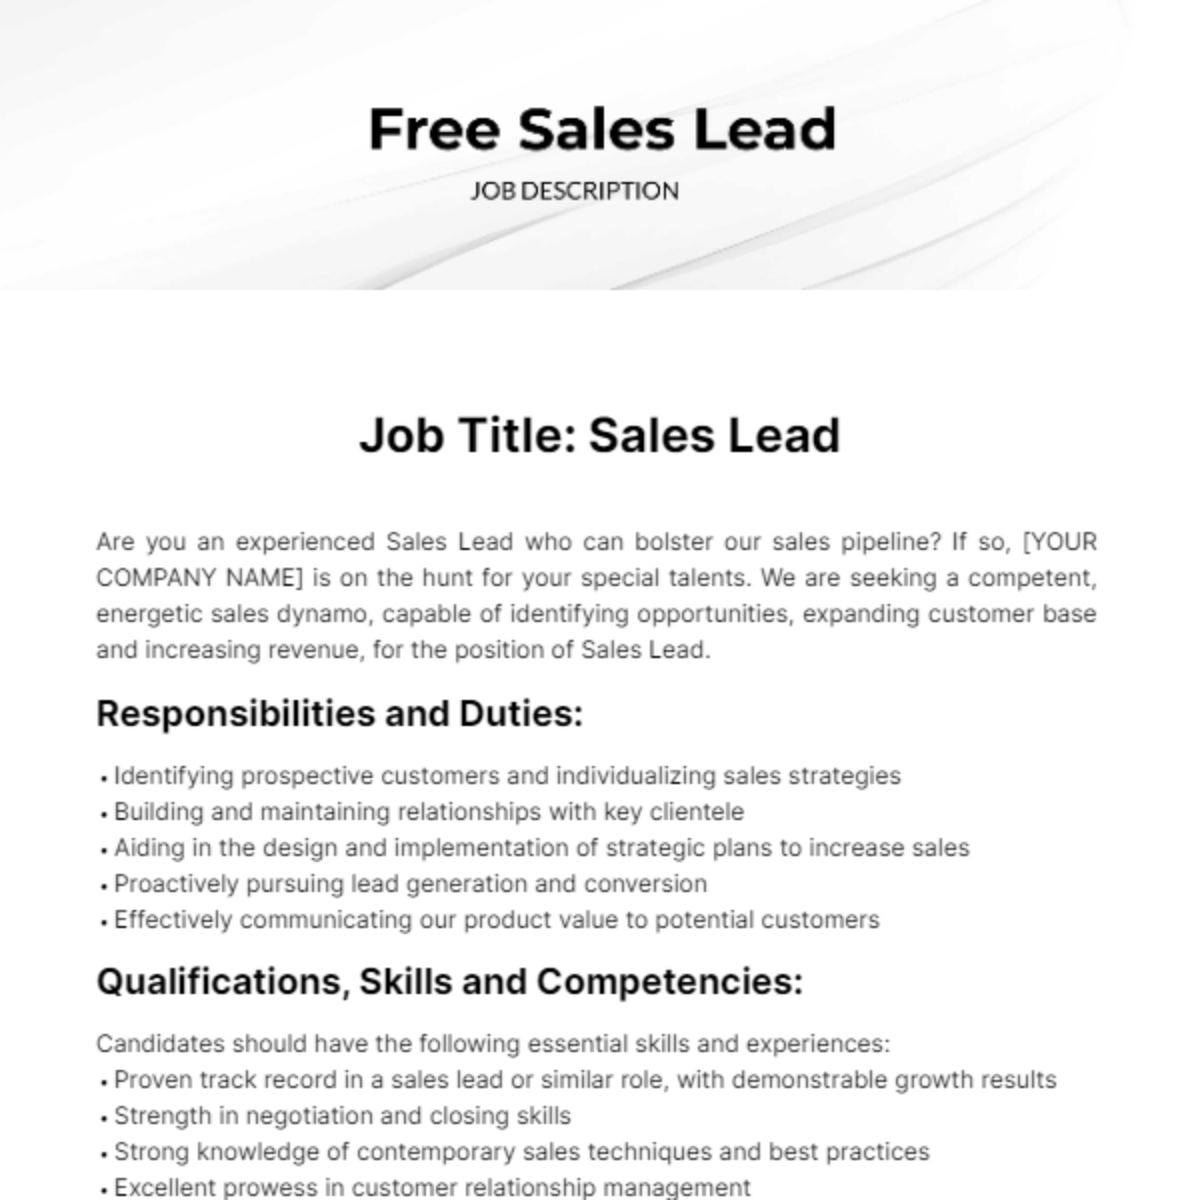 Free Sales Lead Job Description Template